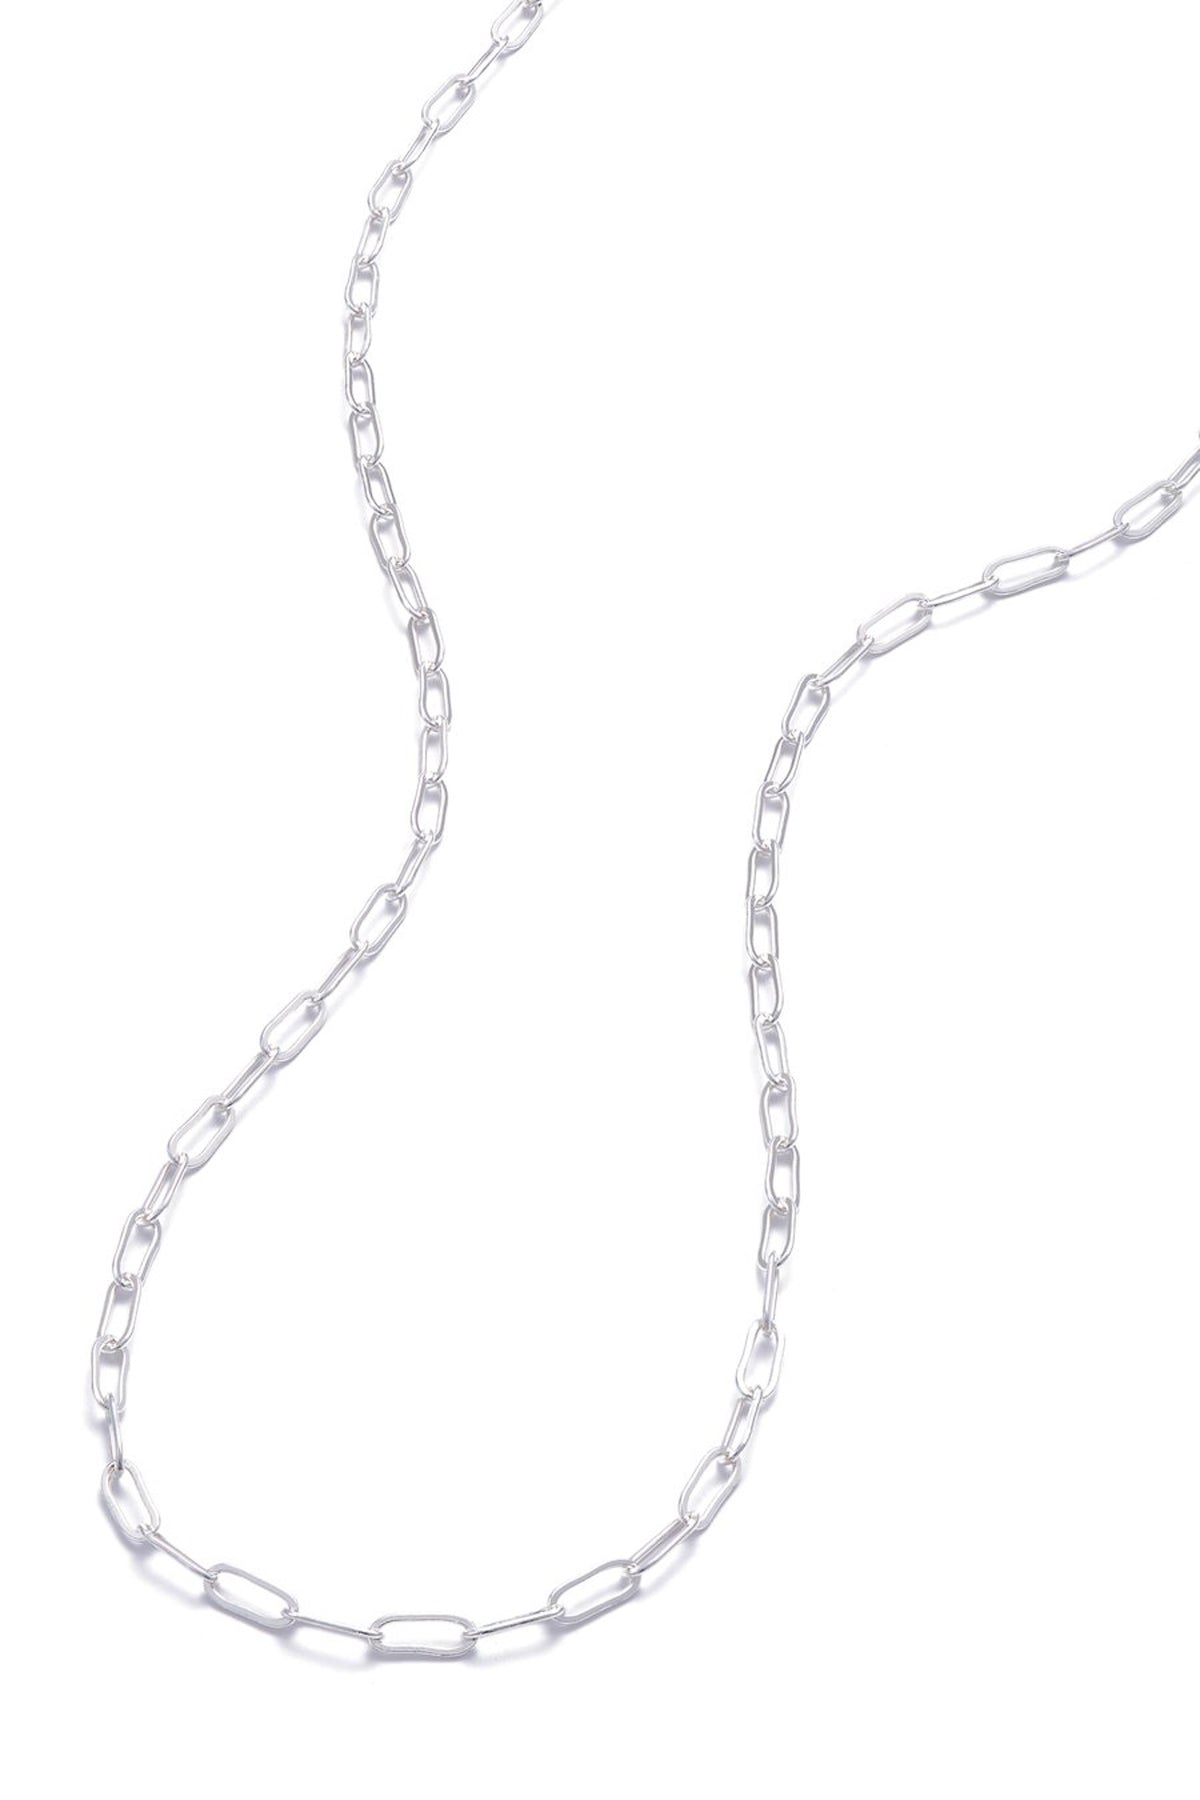 Baleen Solo Necklace - Silver